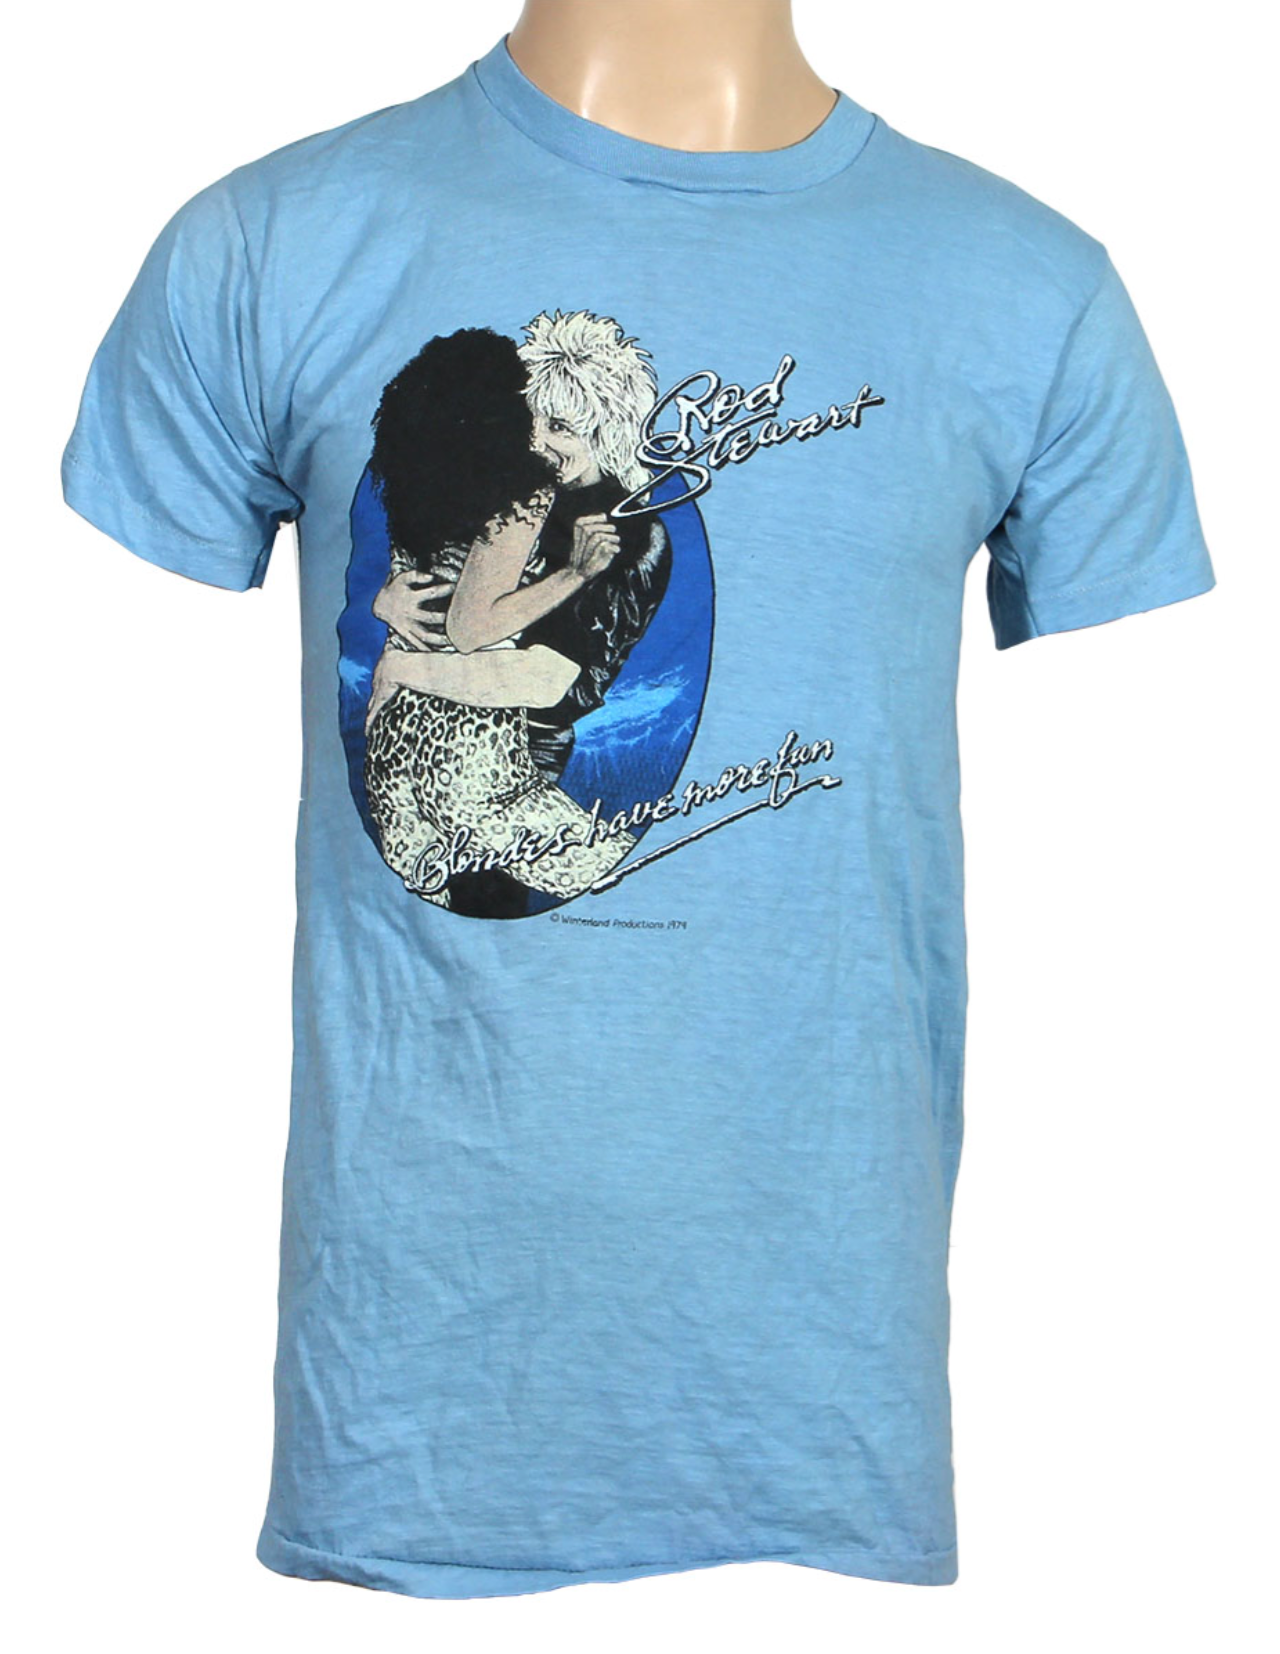 Stewart, Rod. (b. 1945)  "Blondes Have More Fun" – 1979 Concert T-Shirt